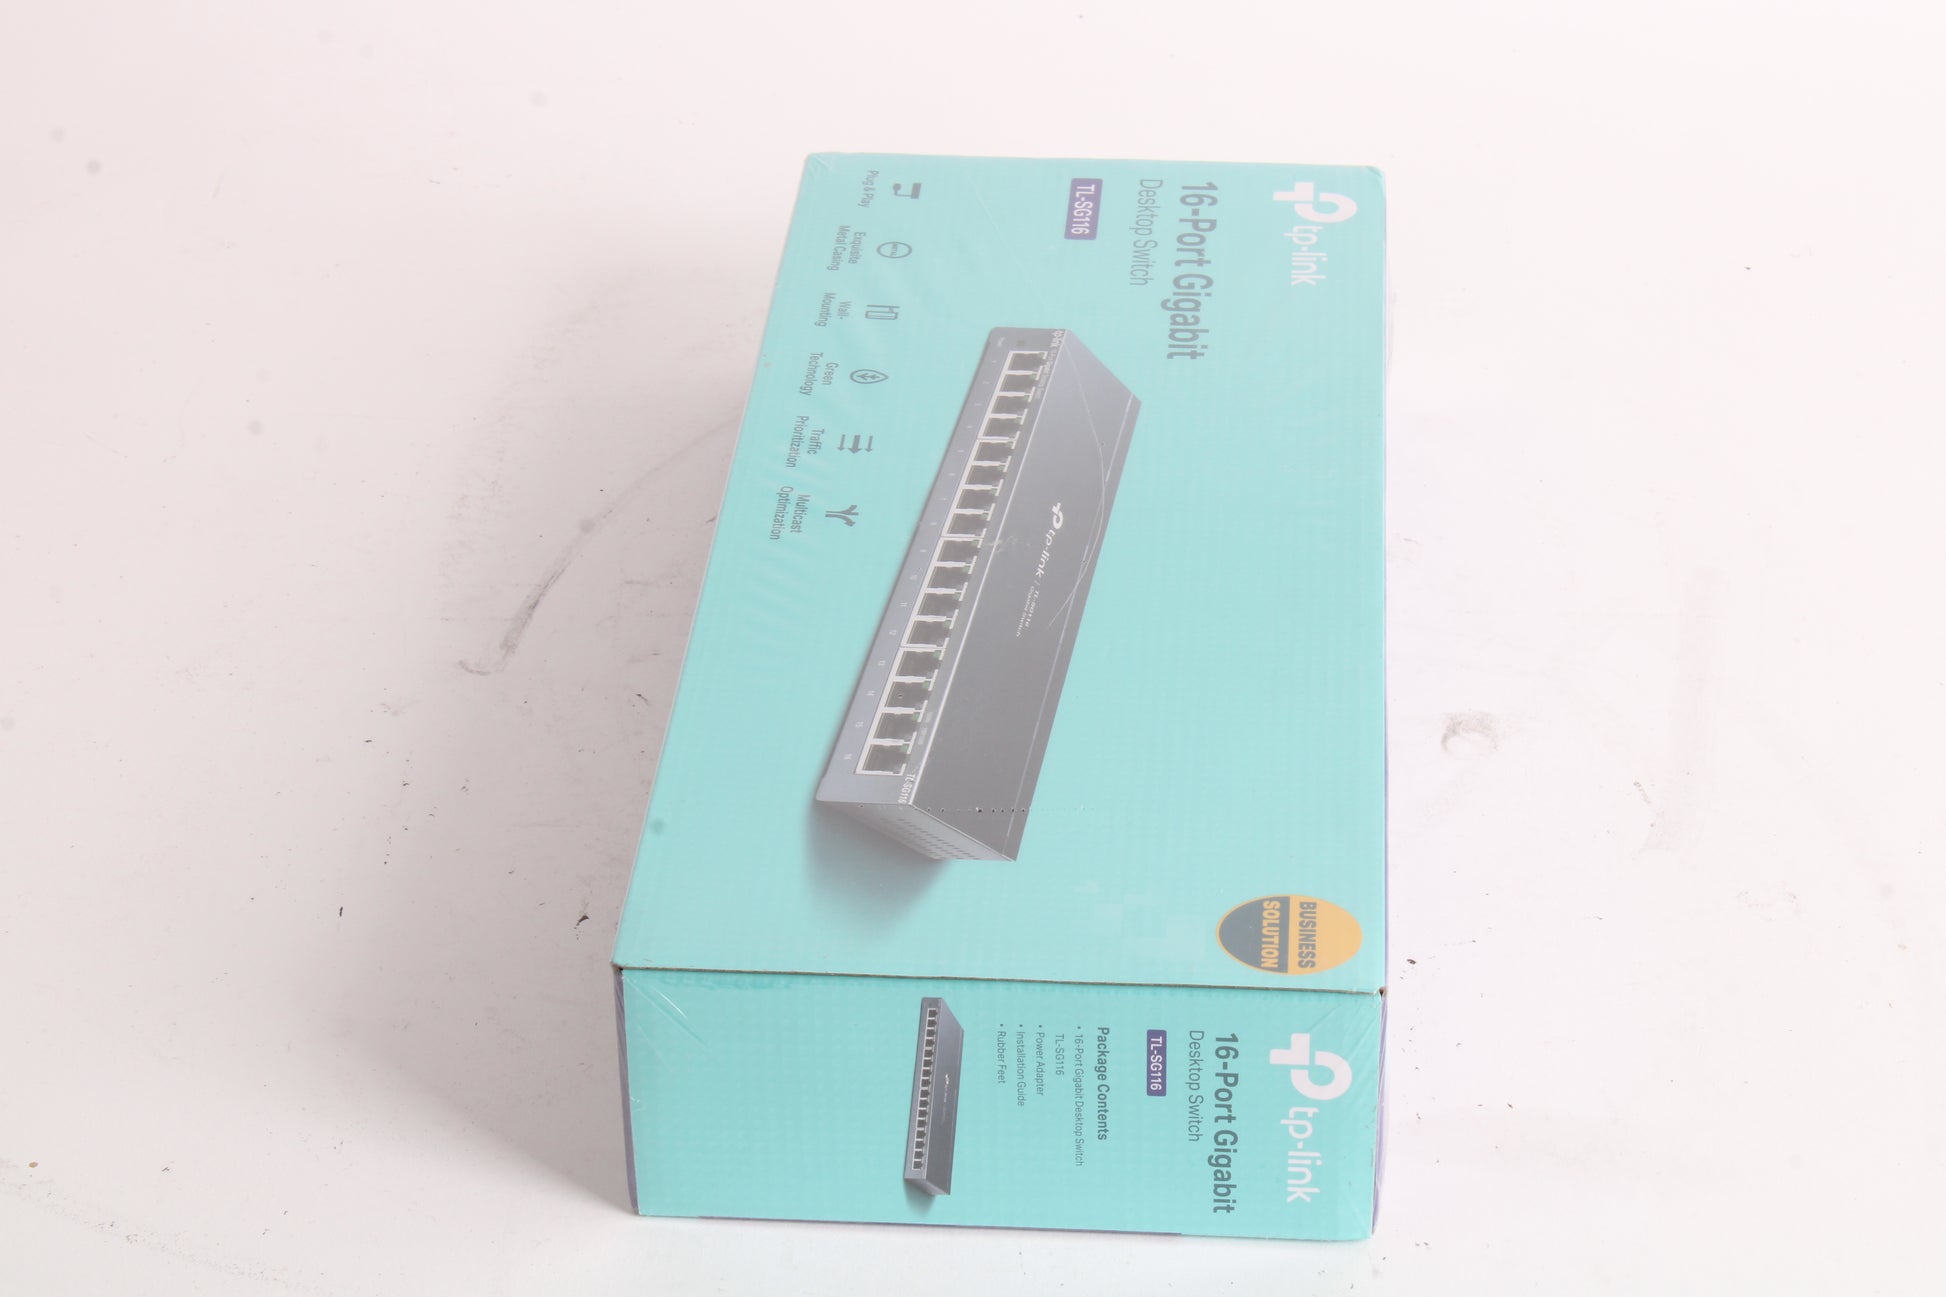 TL-SG116, 16-Port Gigabit Desktop Switch